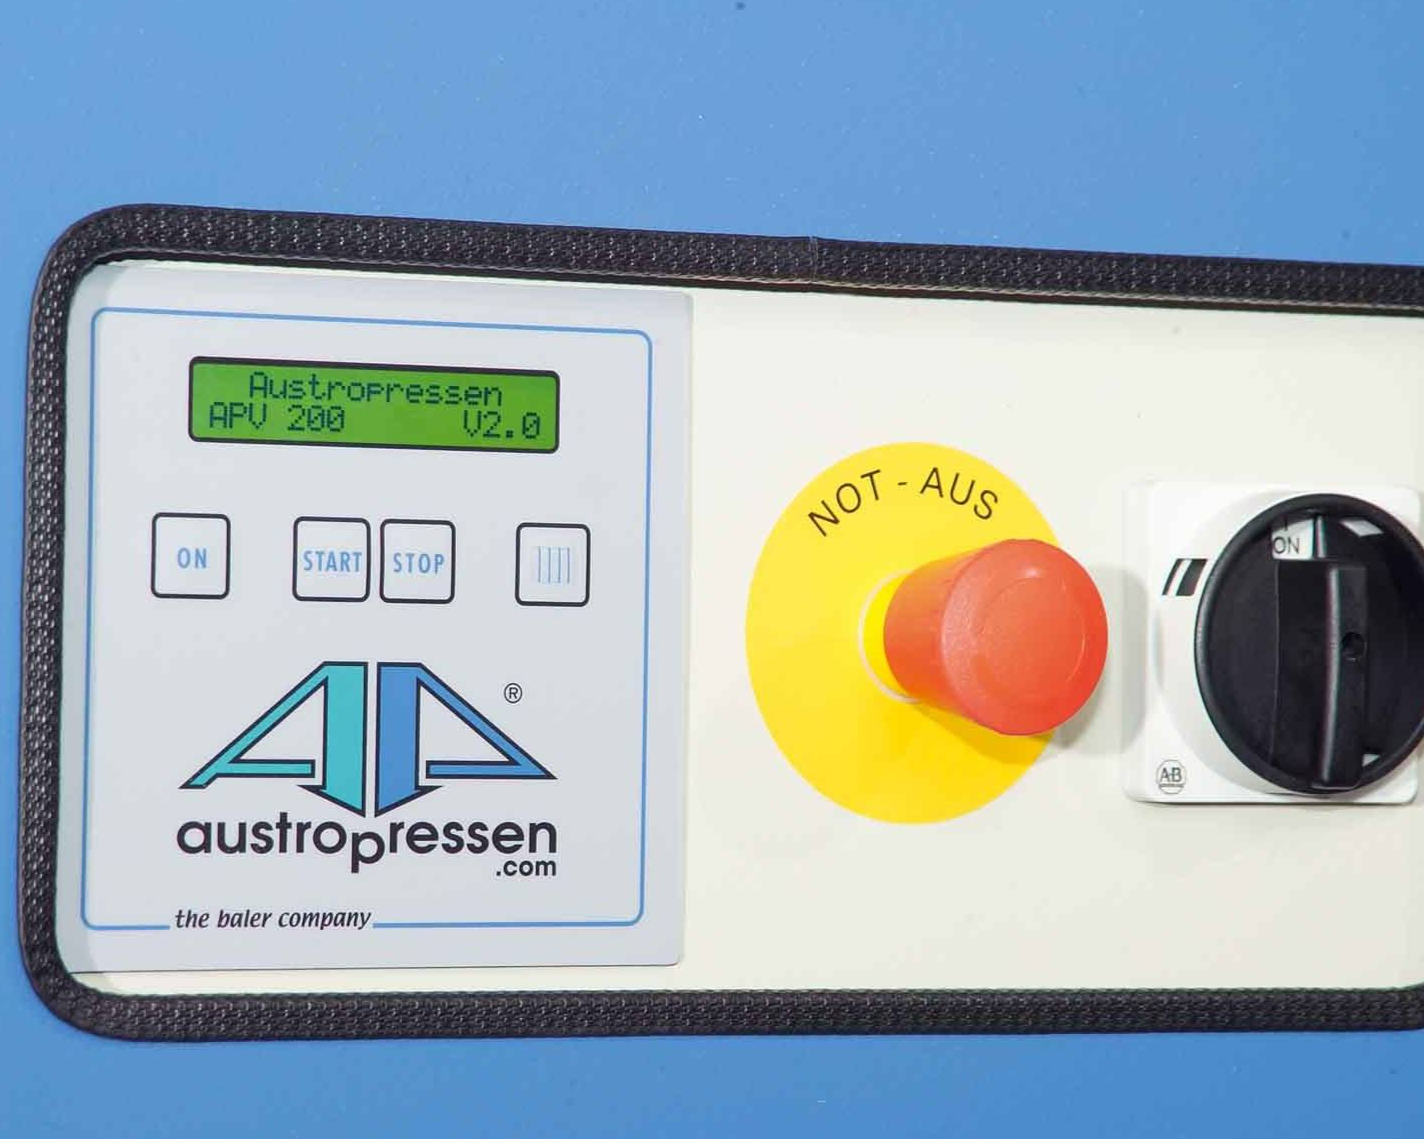 Display operation baler APV 200 Austropressen